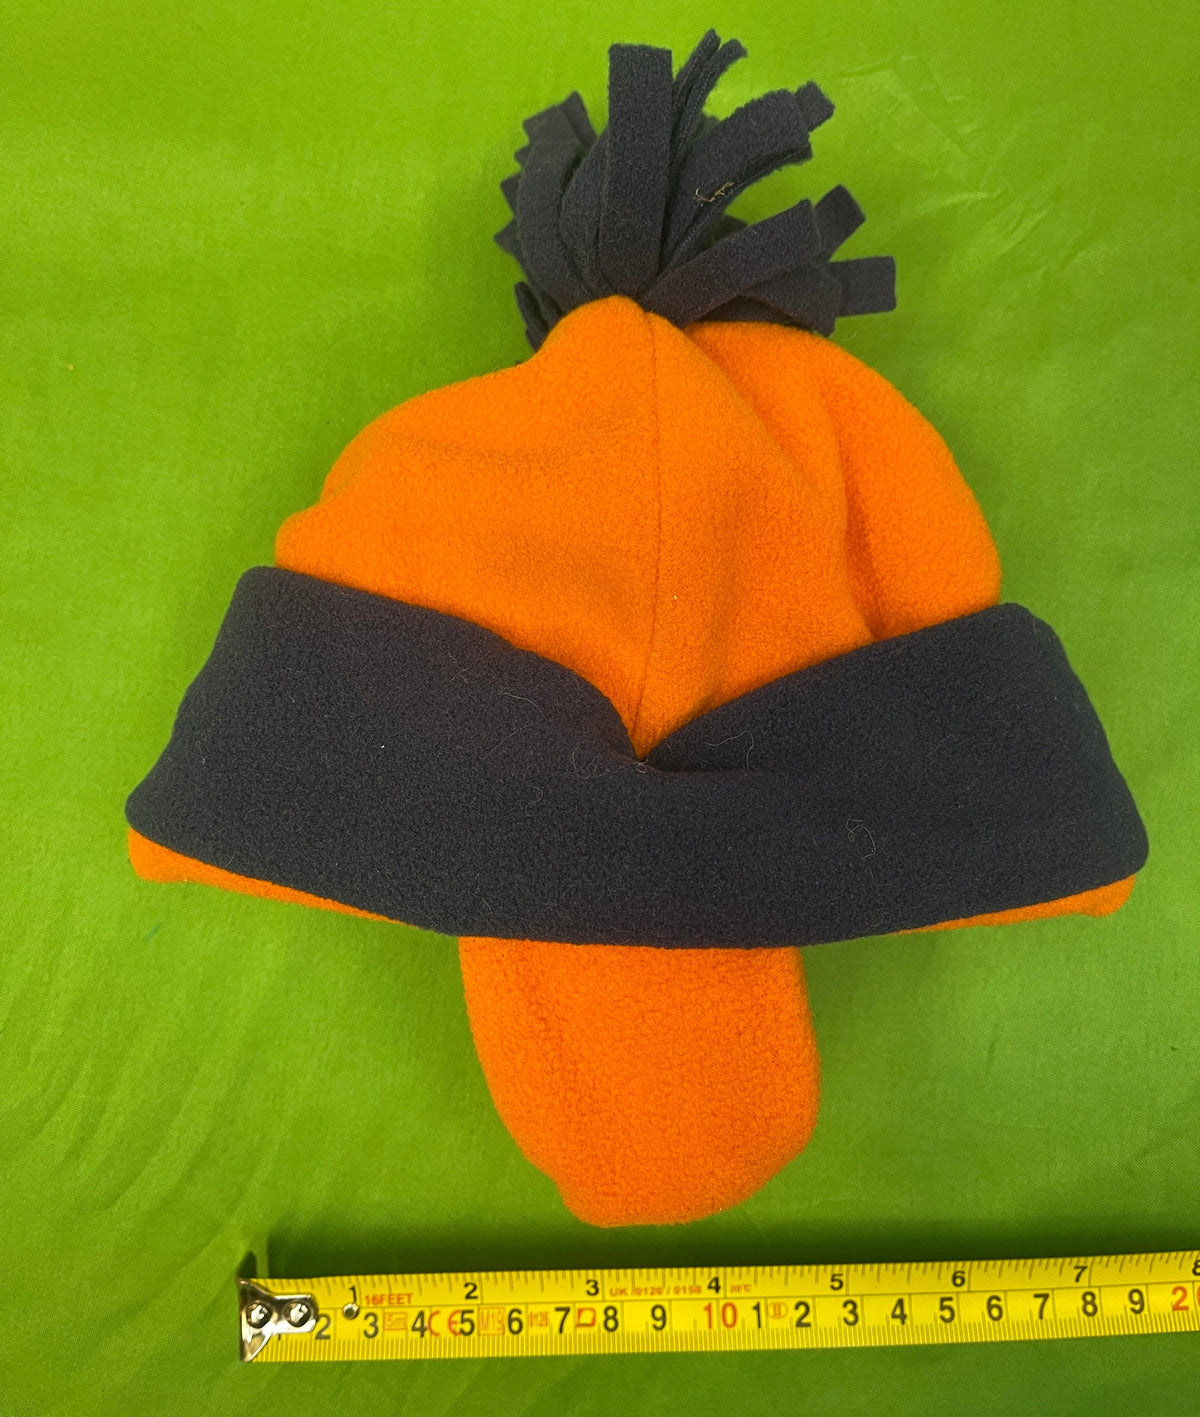 NFL Denver Broncos Fleece Woolly Hat w/Ear Covers Toddler 2T-4T